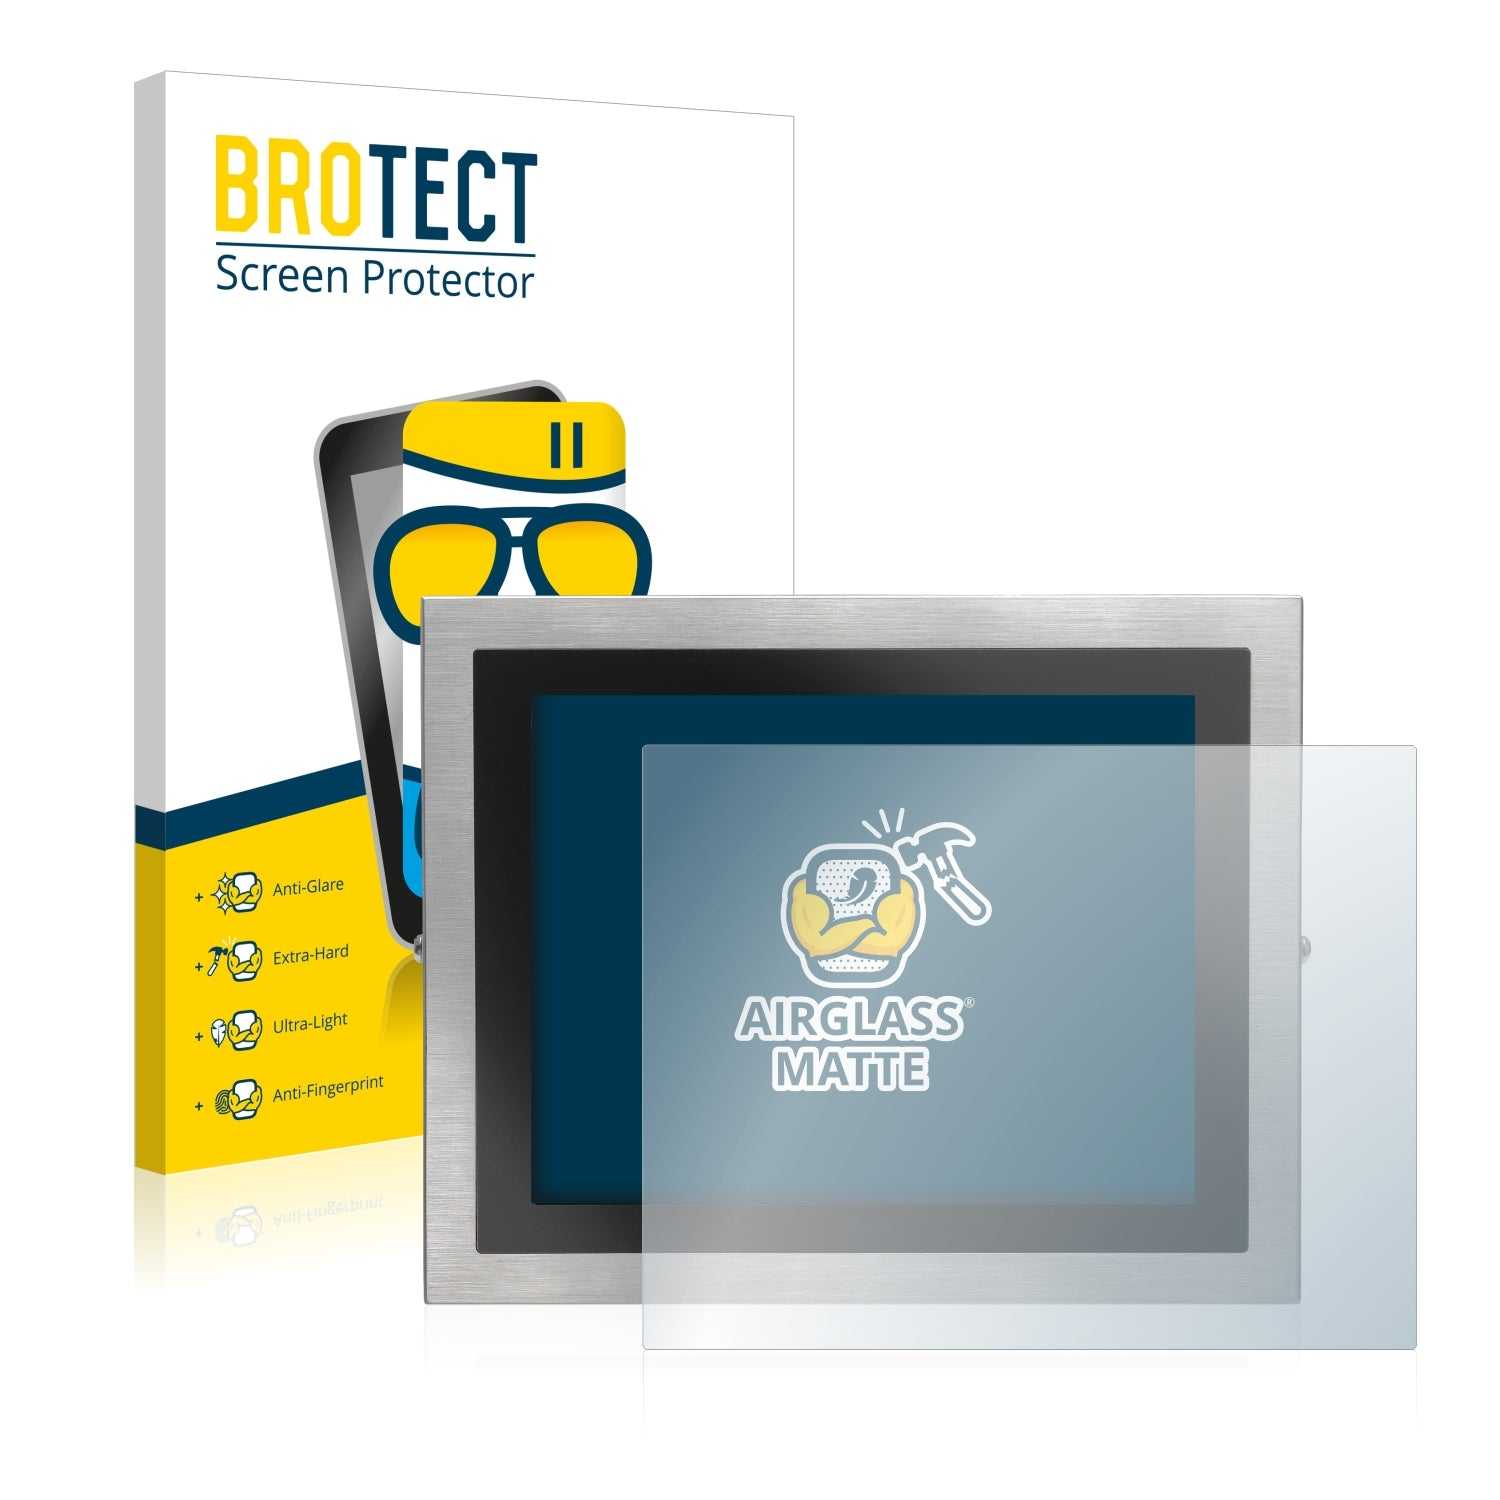 ScreenShield, Anti-Glare Screen Protector for Wincomm Hygrolion 106T 10